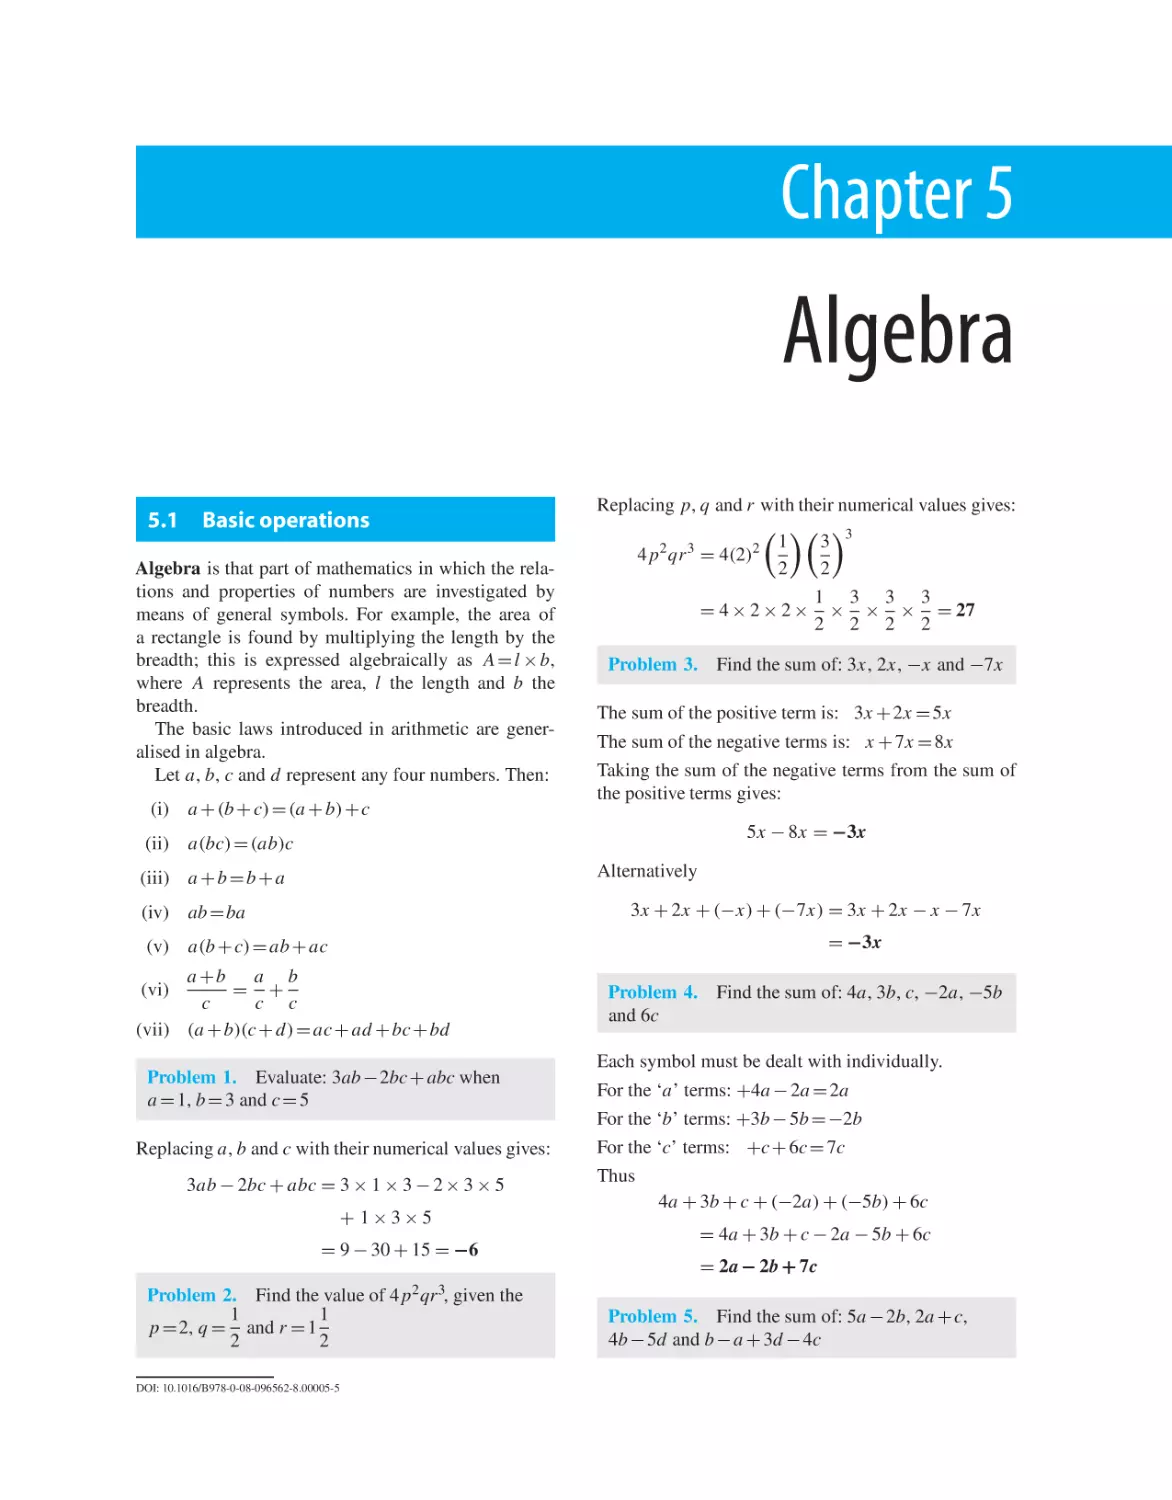 Chapter 5. Algebra
5.1 Basic operations